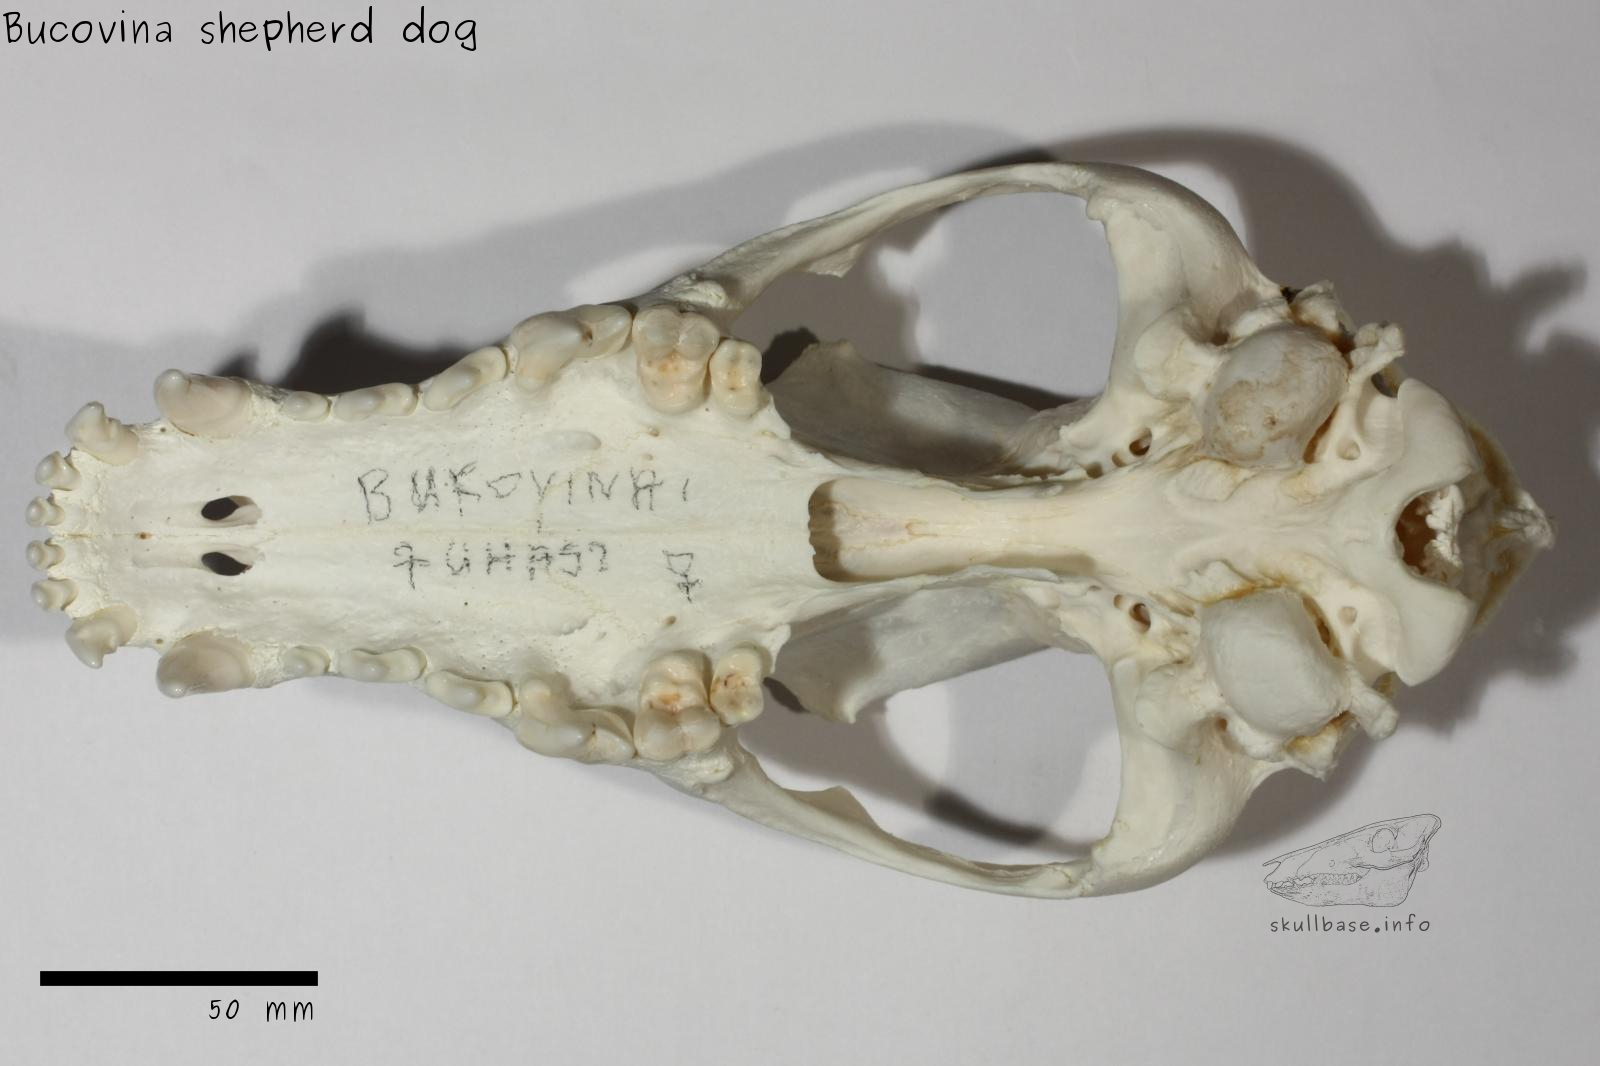 Bucovina shepherd dog (Canis lupus familiaris) skull ventral view